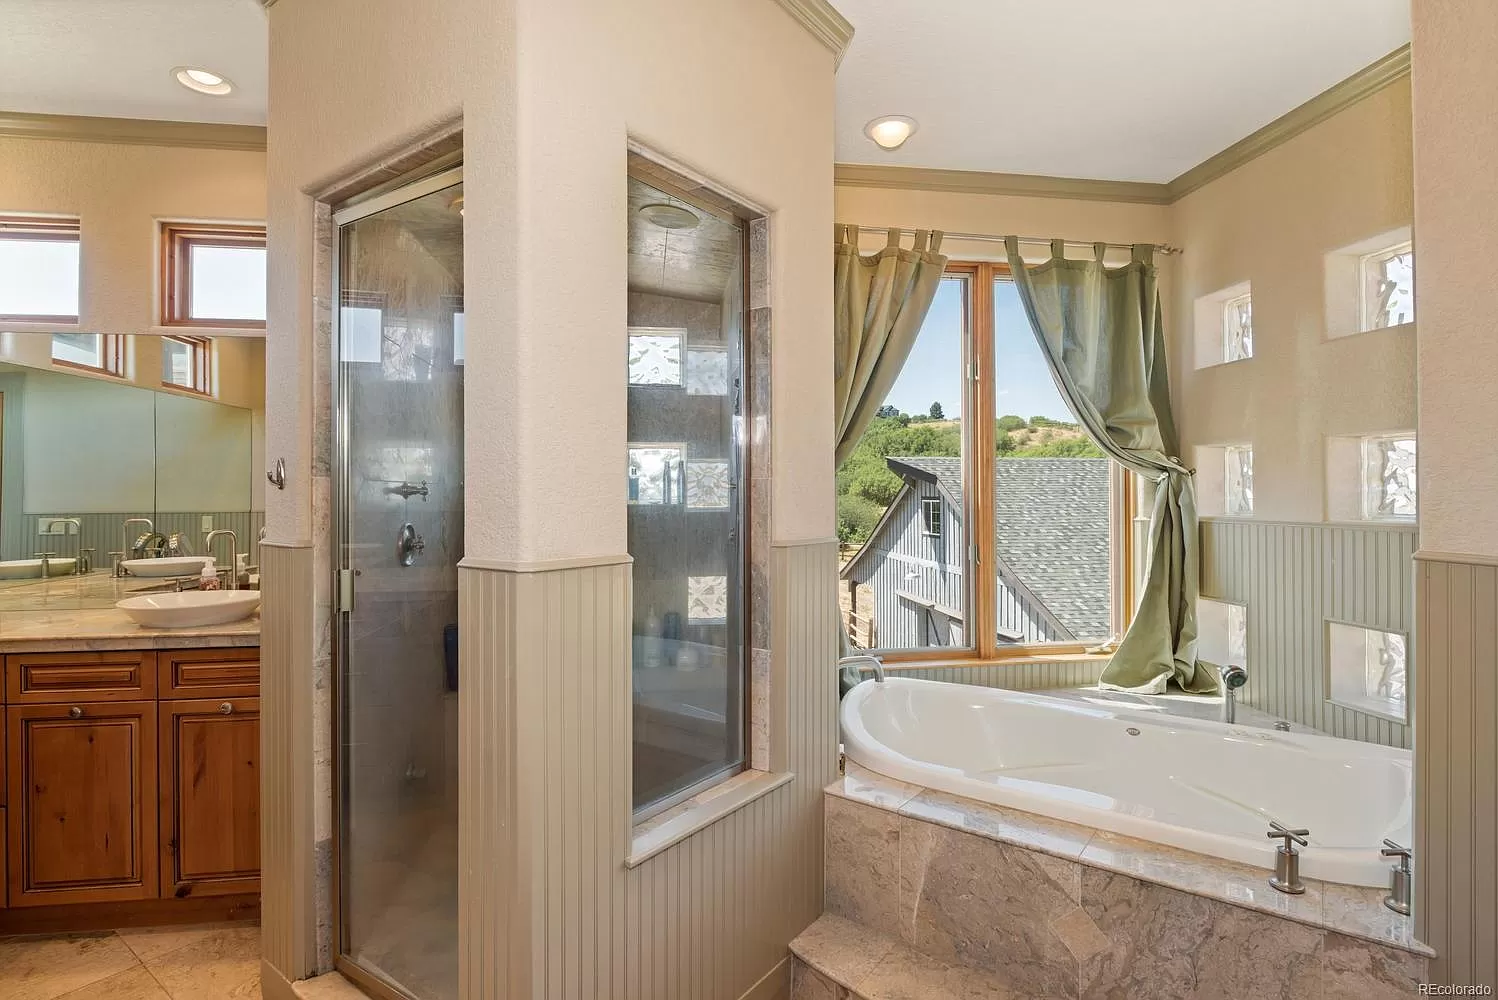 ballard ct bathroom with bathtub and curtains